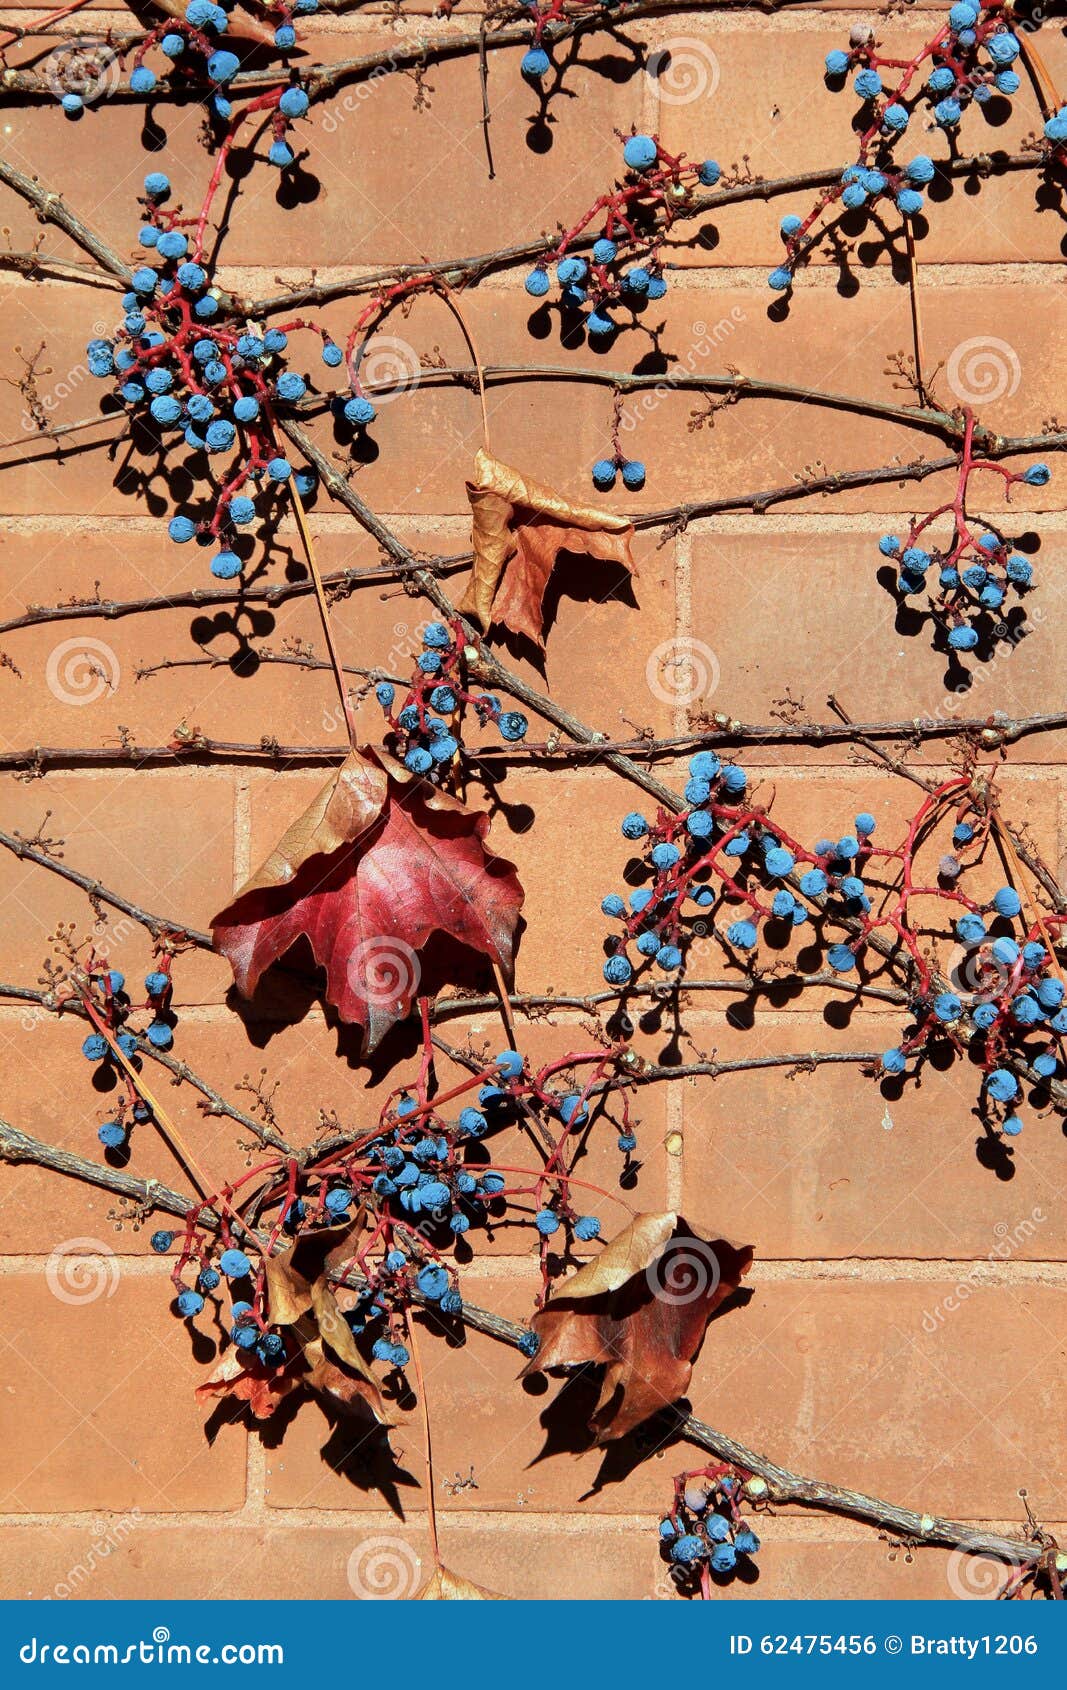 berries and leaves on vine